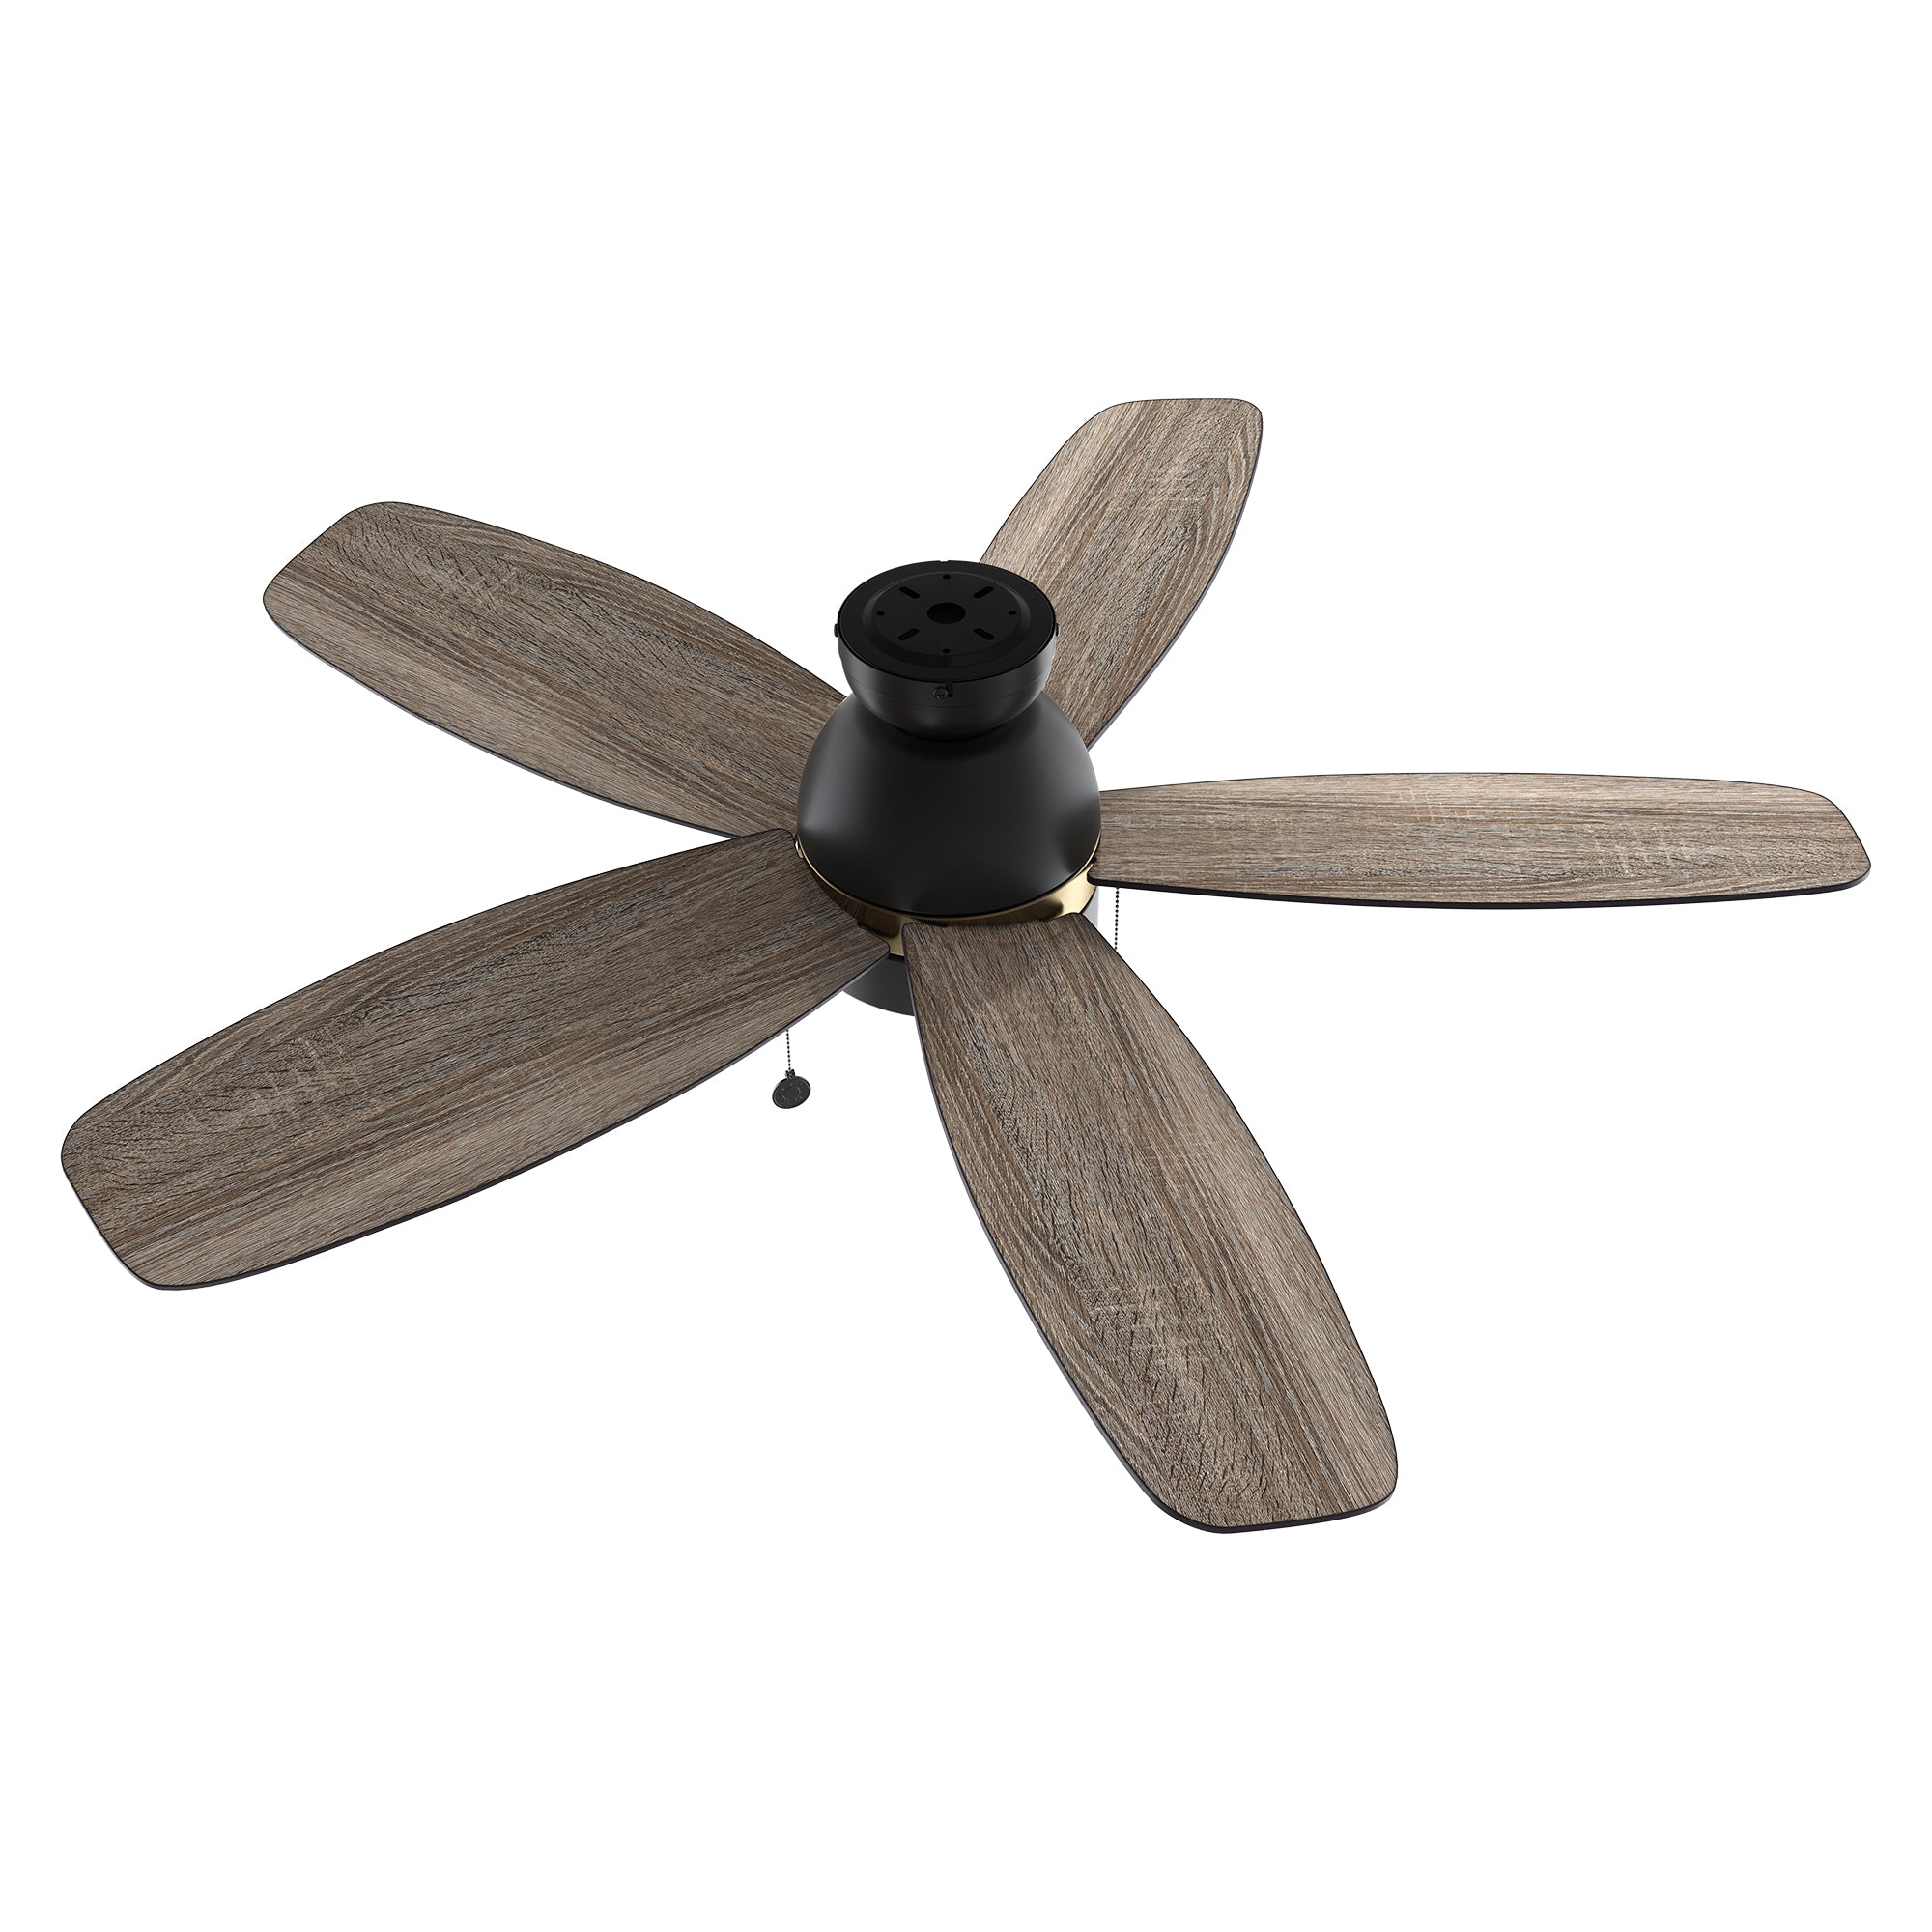 Carro flush mount Treyton 52 inch pull chain ceiling fan with 5 blades, light wood design. #color_Dark-Wood